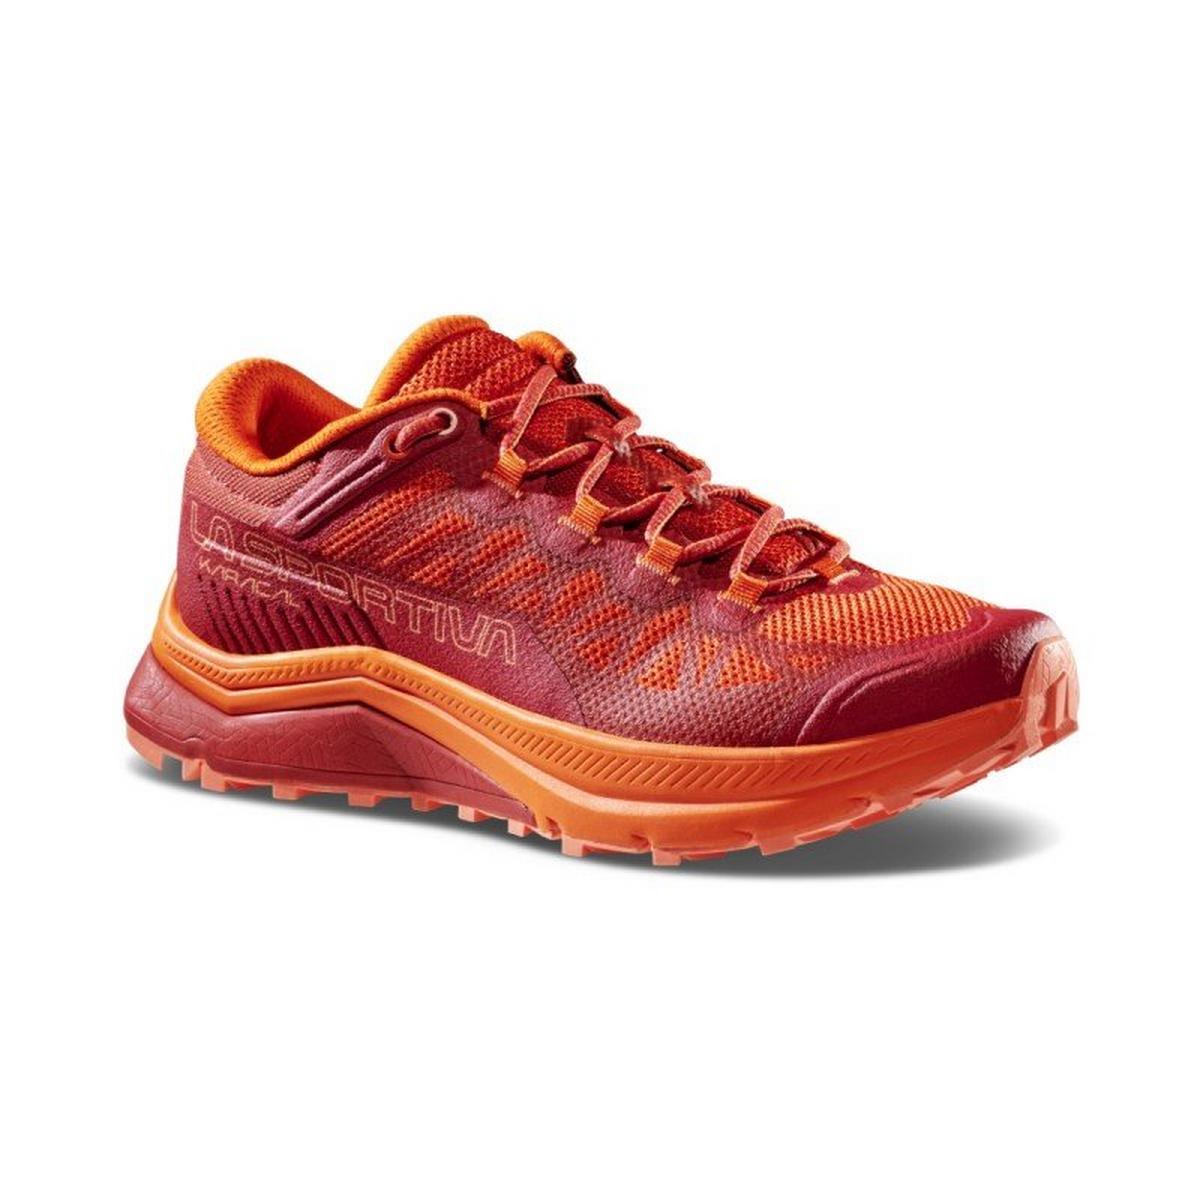 La Sportiva Women's Karacal Trail Running Shoes - Red